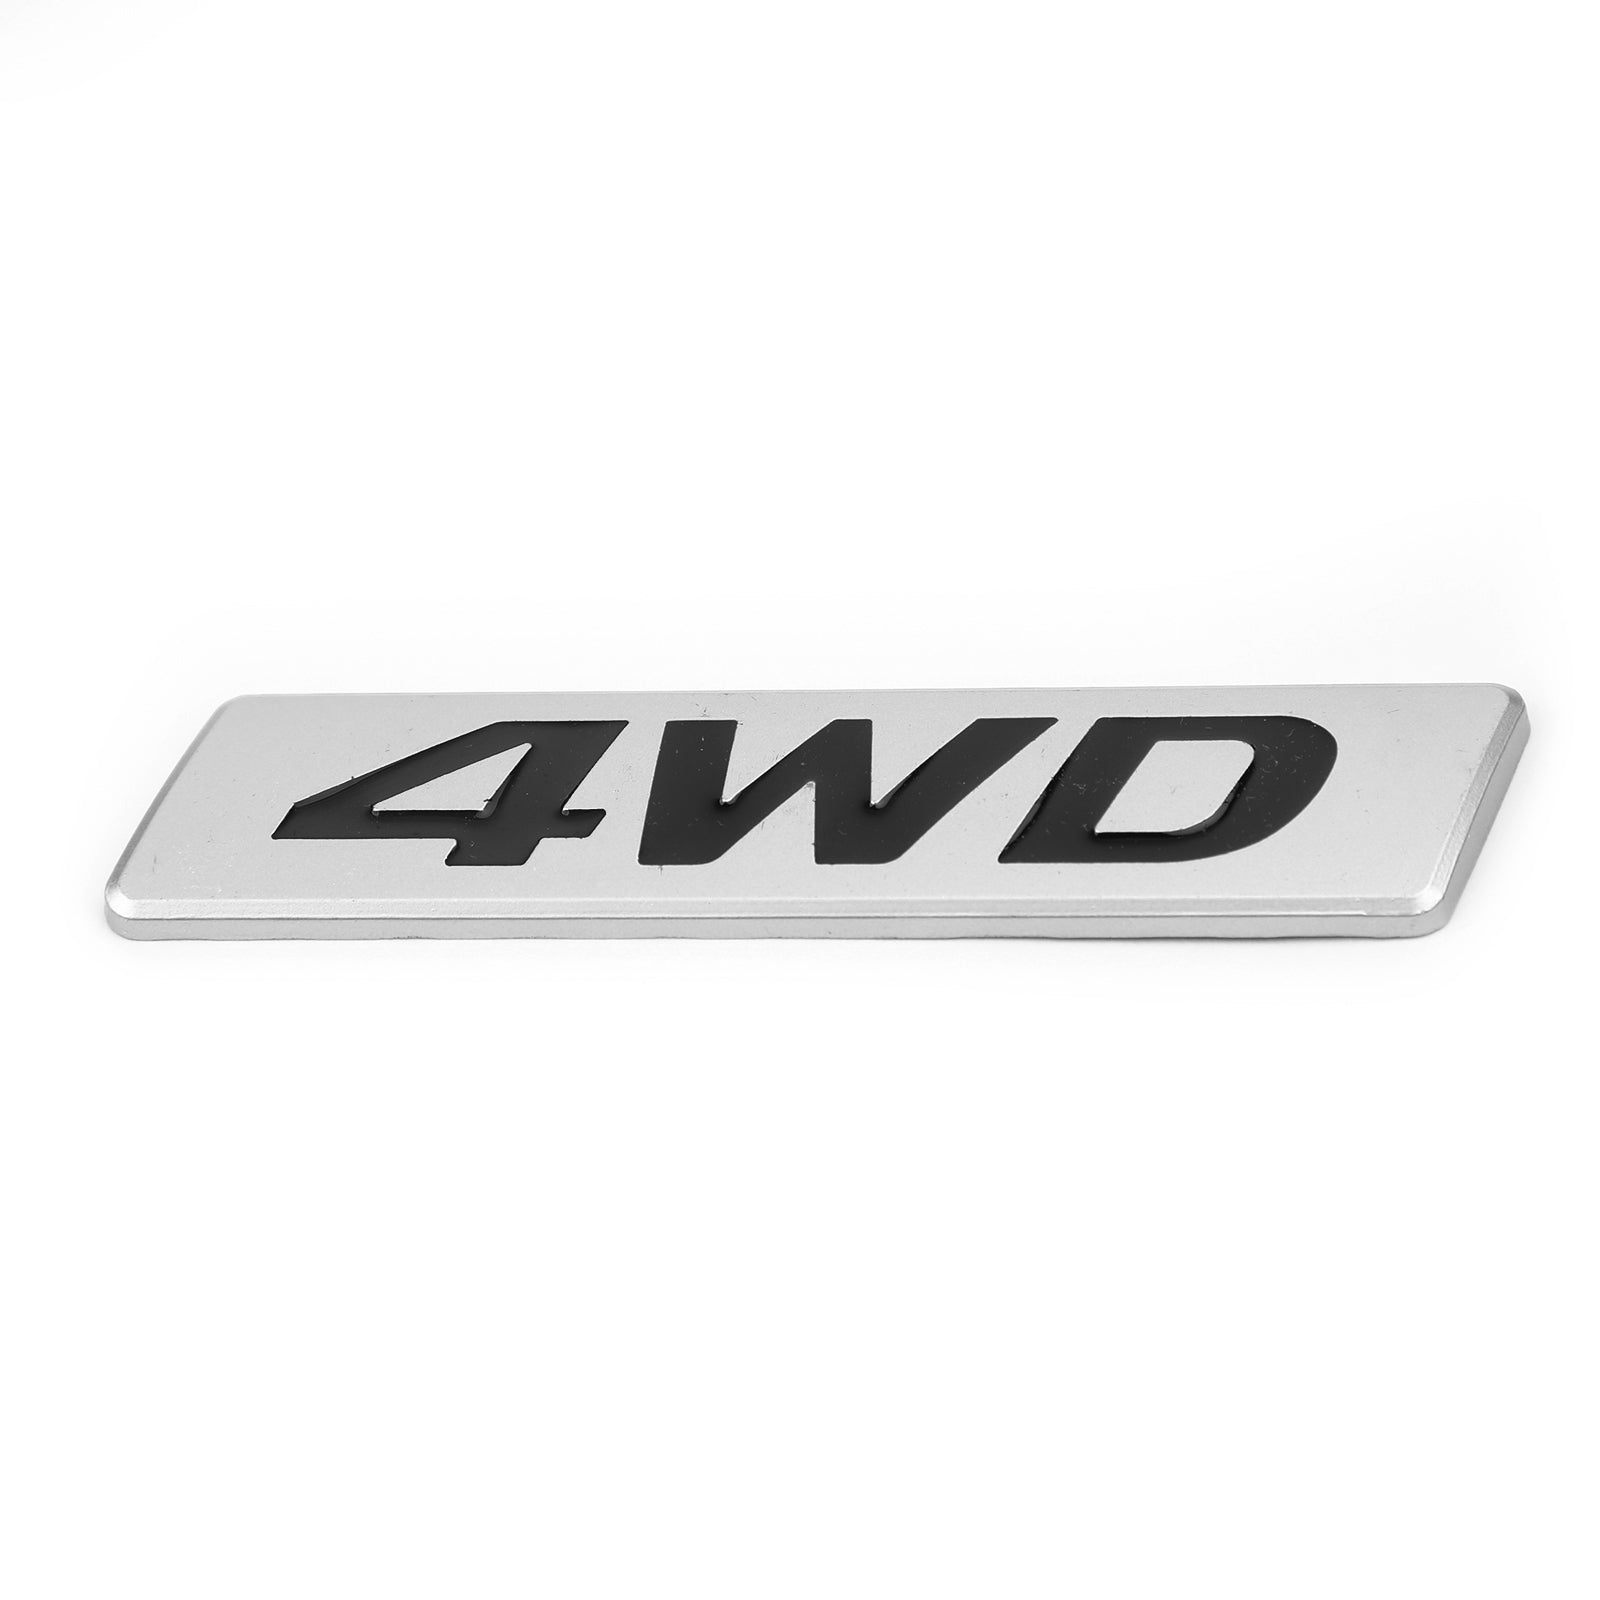 New Metal 4WD Emblem Car Fender Trunk Portellone Distintivo Decalcomanie Adesivo 4WD 4X4 SUV Generico